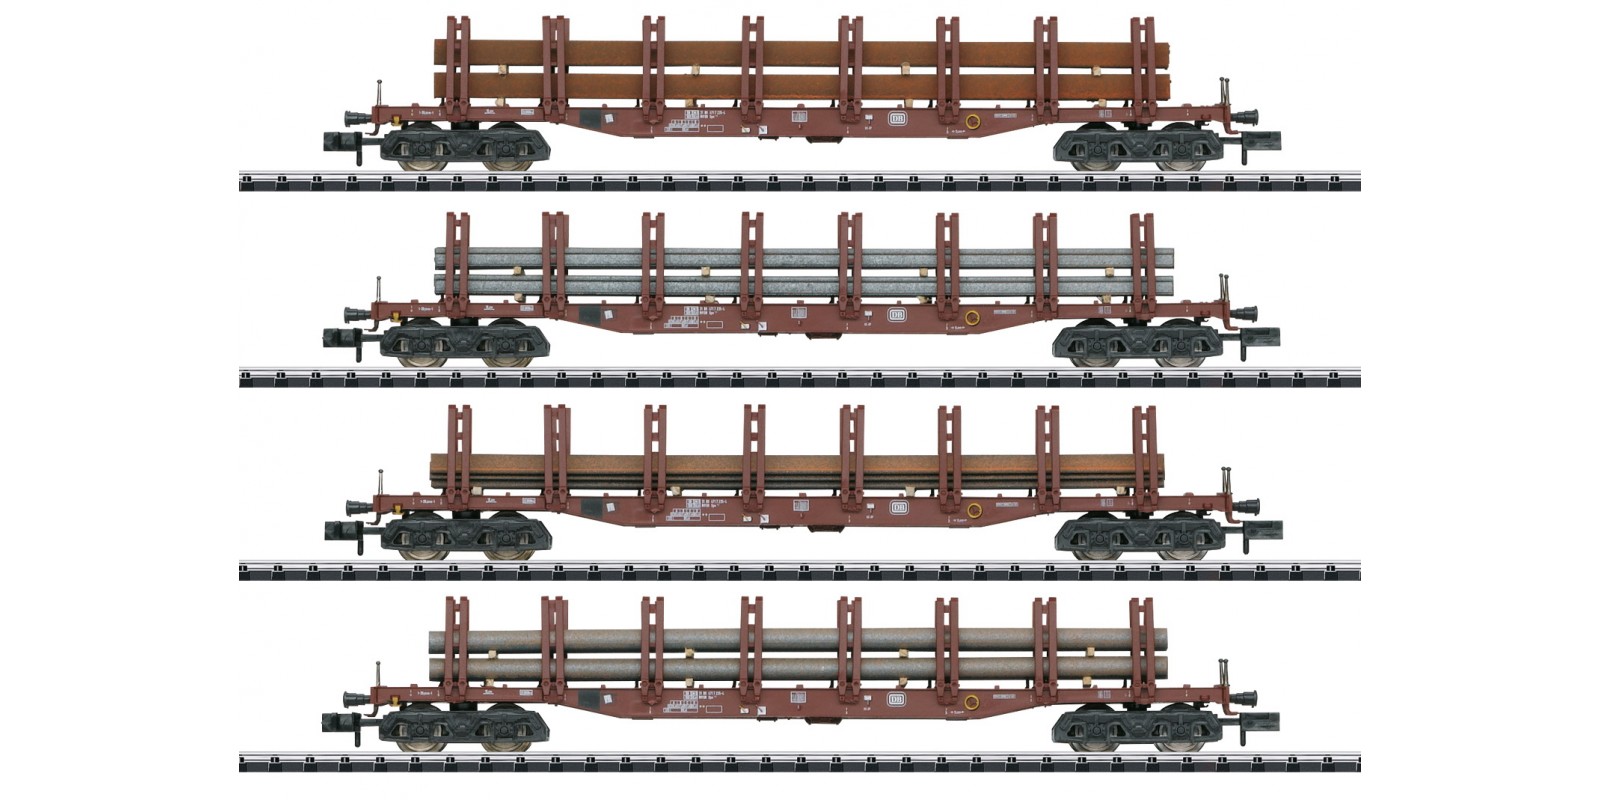 T15484 “Steel Transport” Freight Car Set